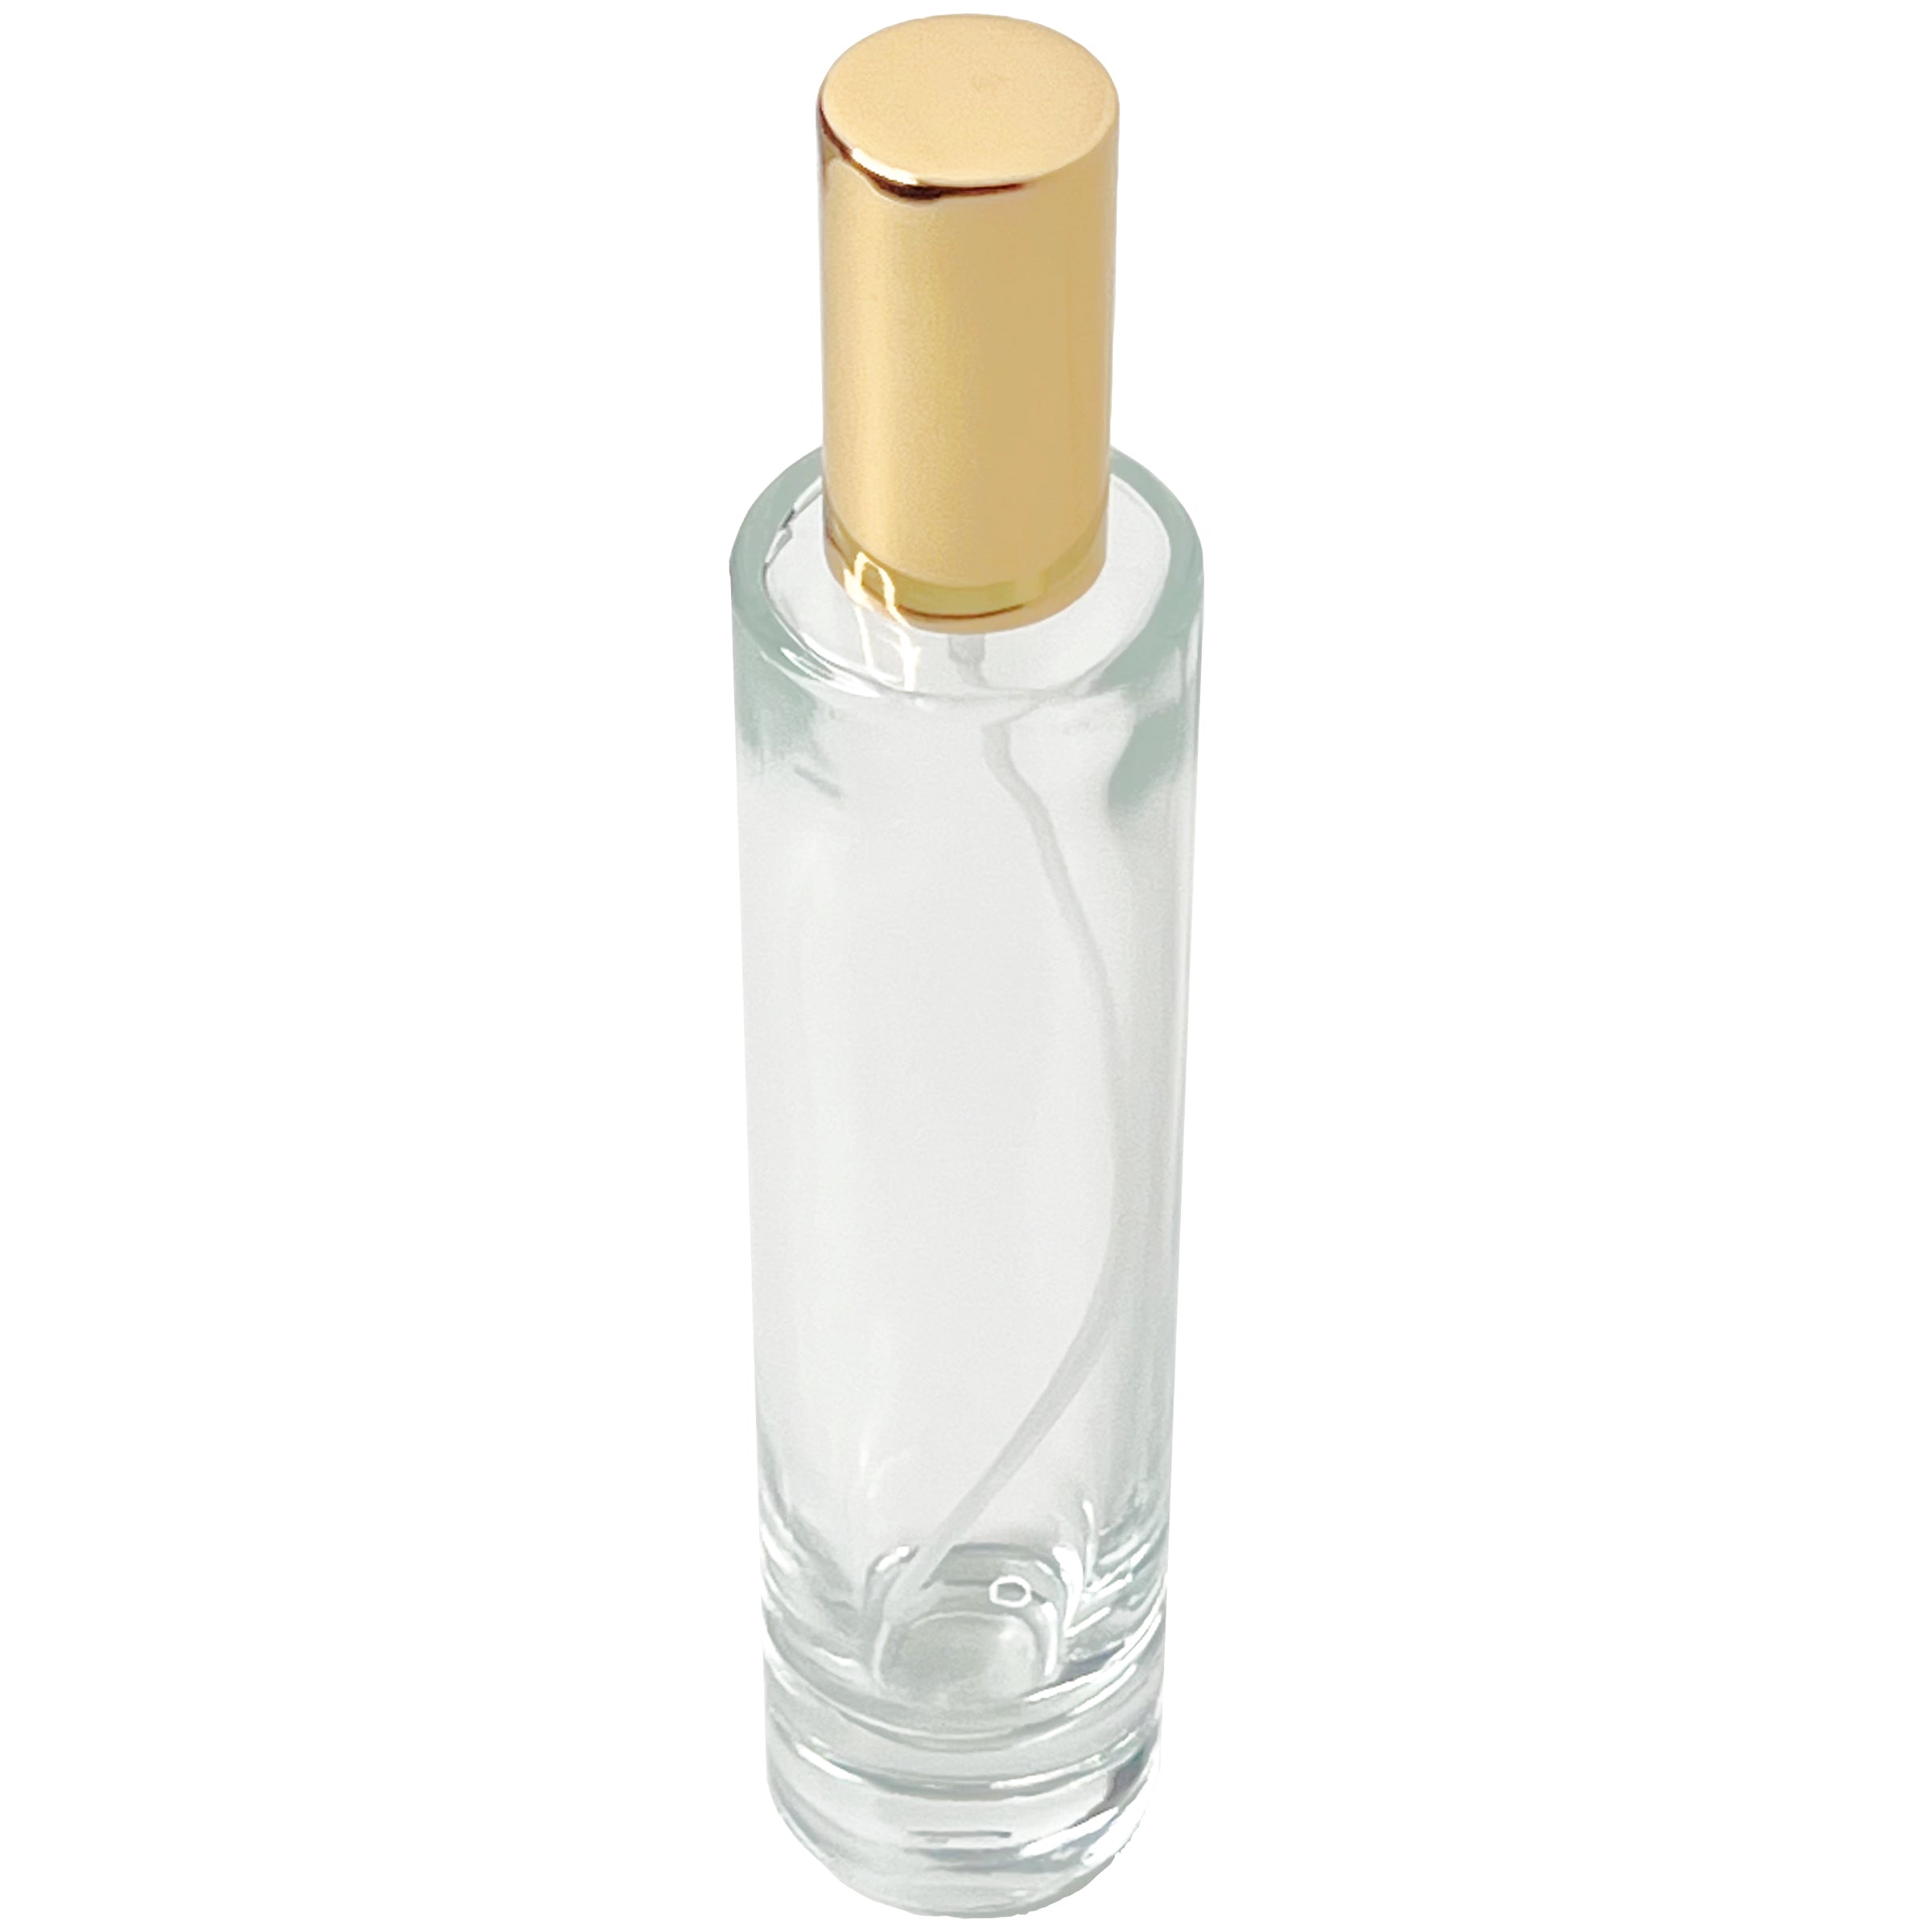 50ml 1.7oz thick tall cylinder glass perfume spray bottles